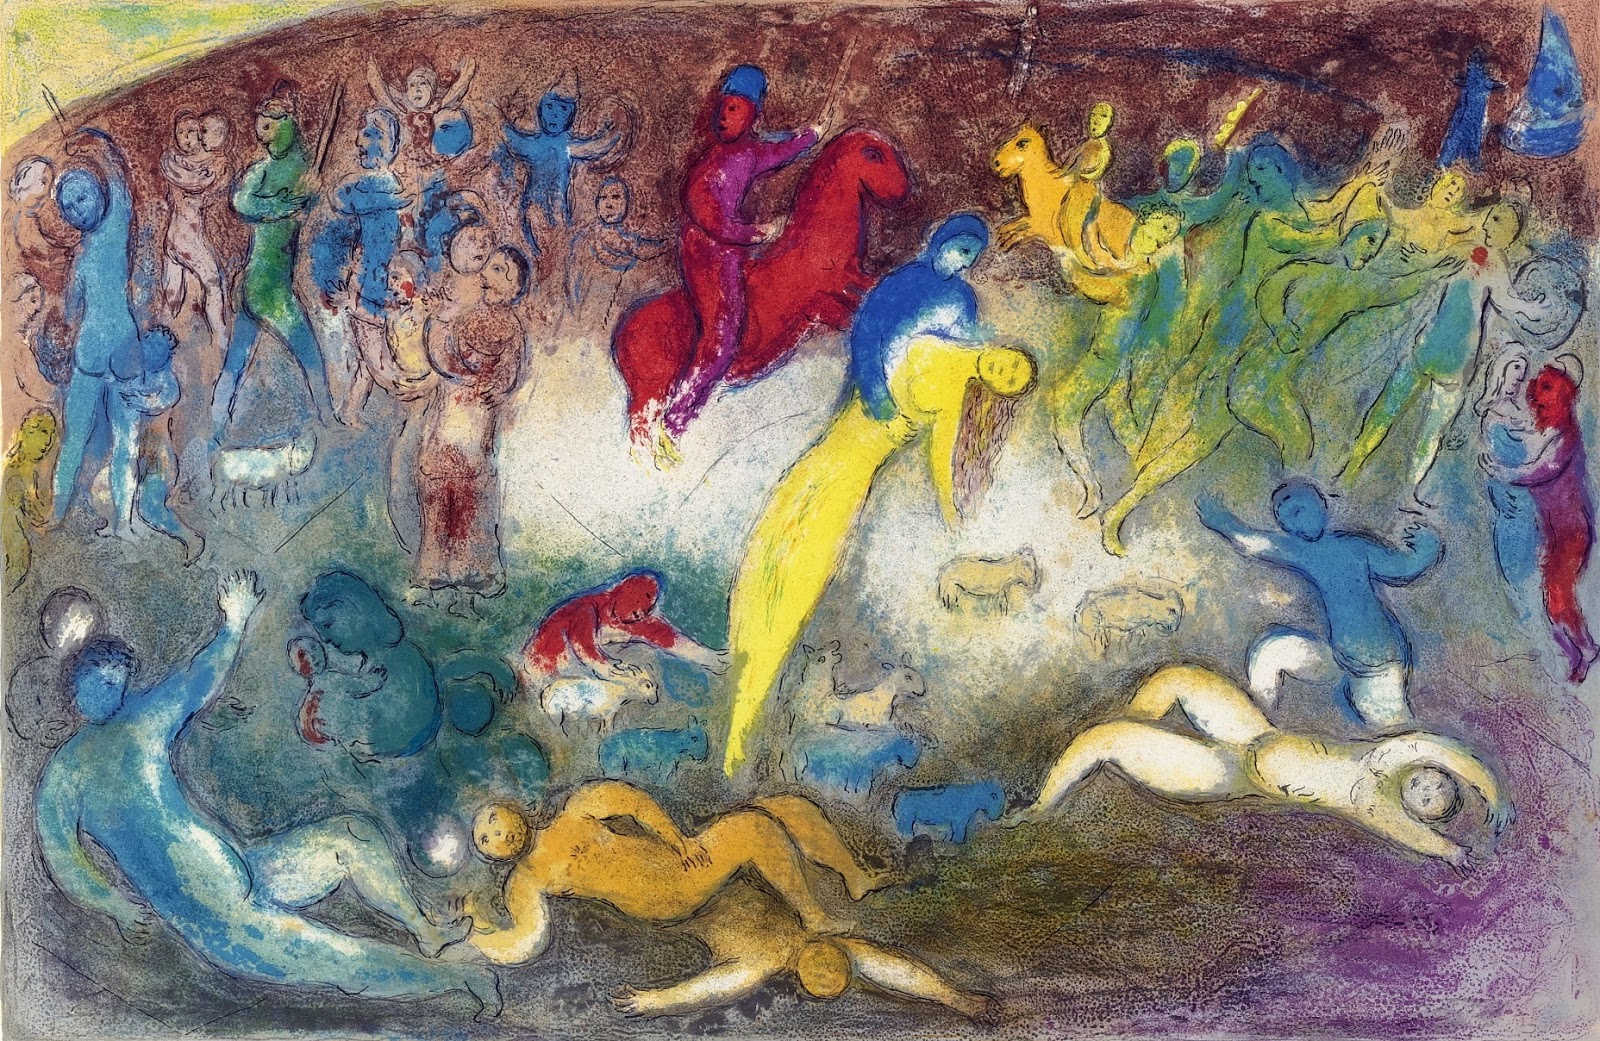 Marc+Chagall-1887-1985 (228).jpg